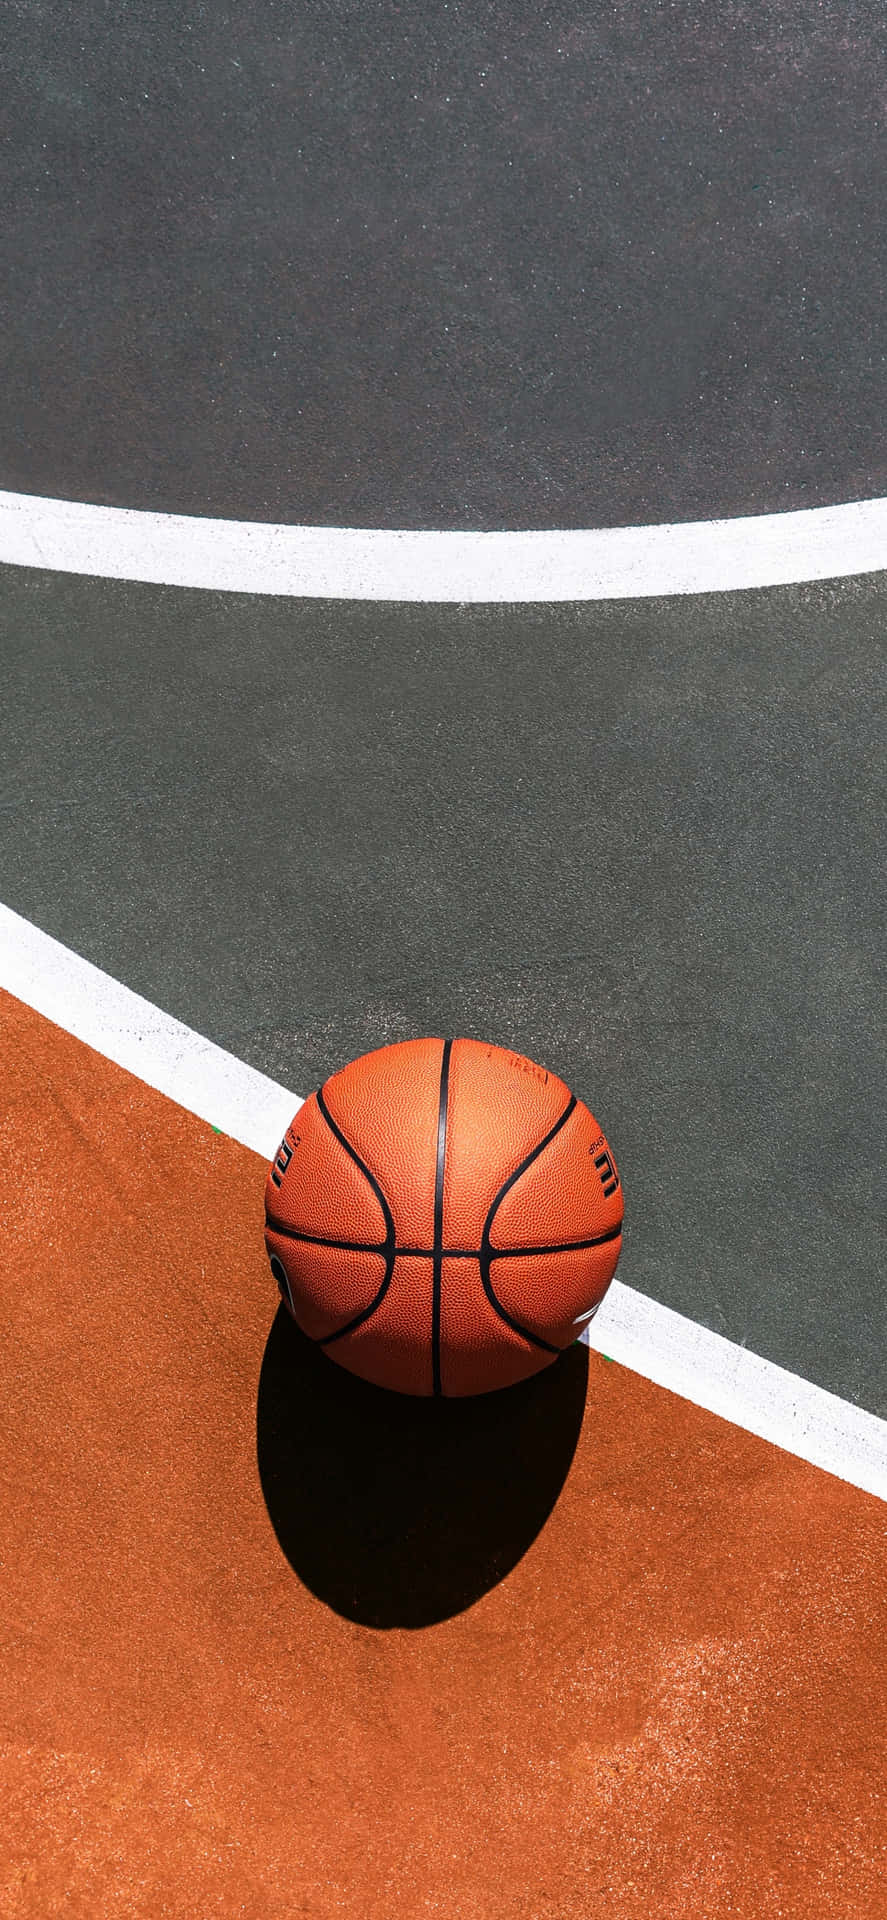 Iphonexs Basketball Nba Draft Hintergrund